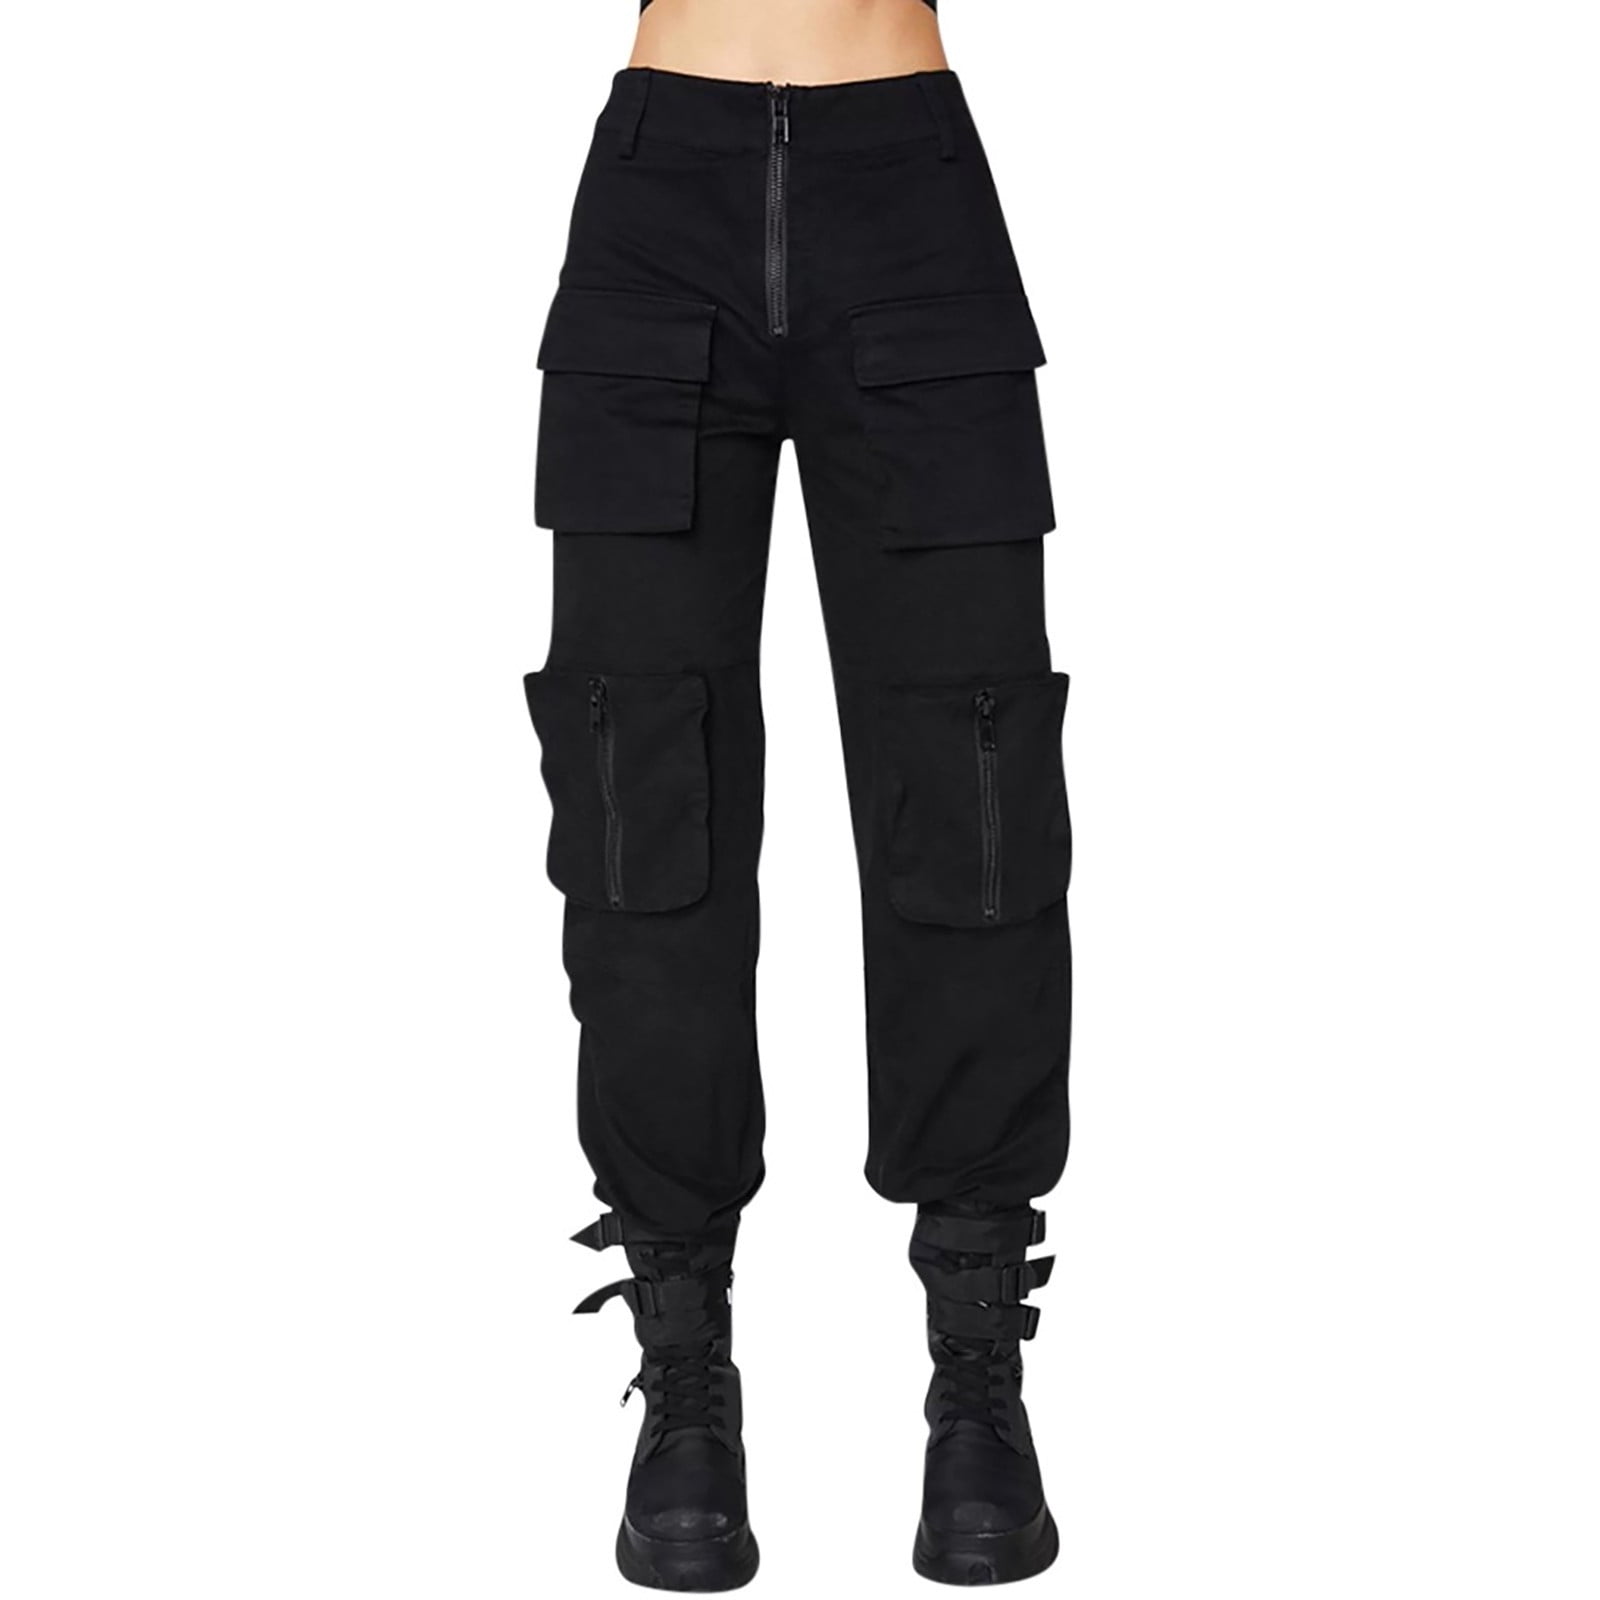 For Sale - Sweetown Black Cargo Pants Women Fashion 2019 Pockets